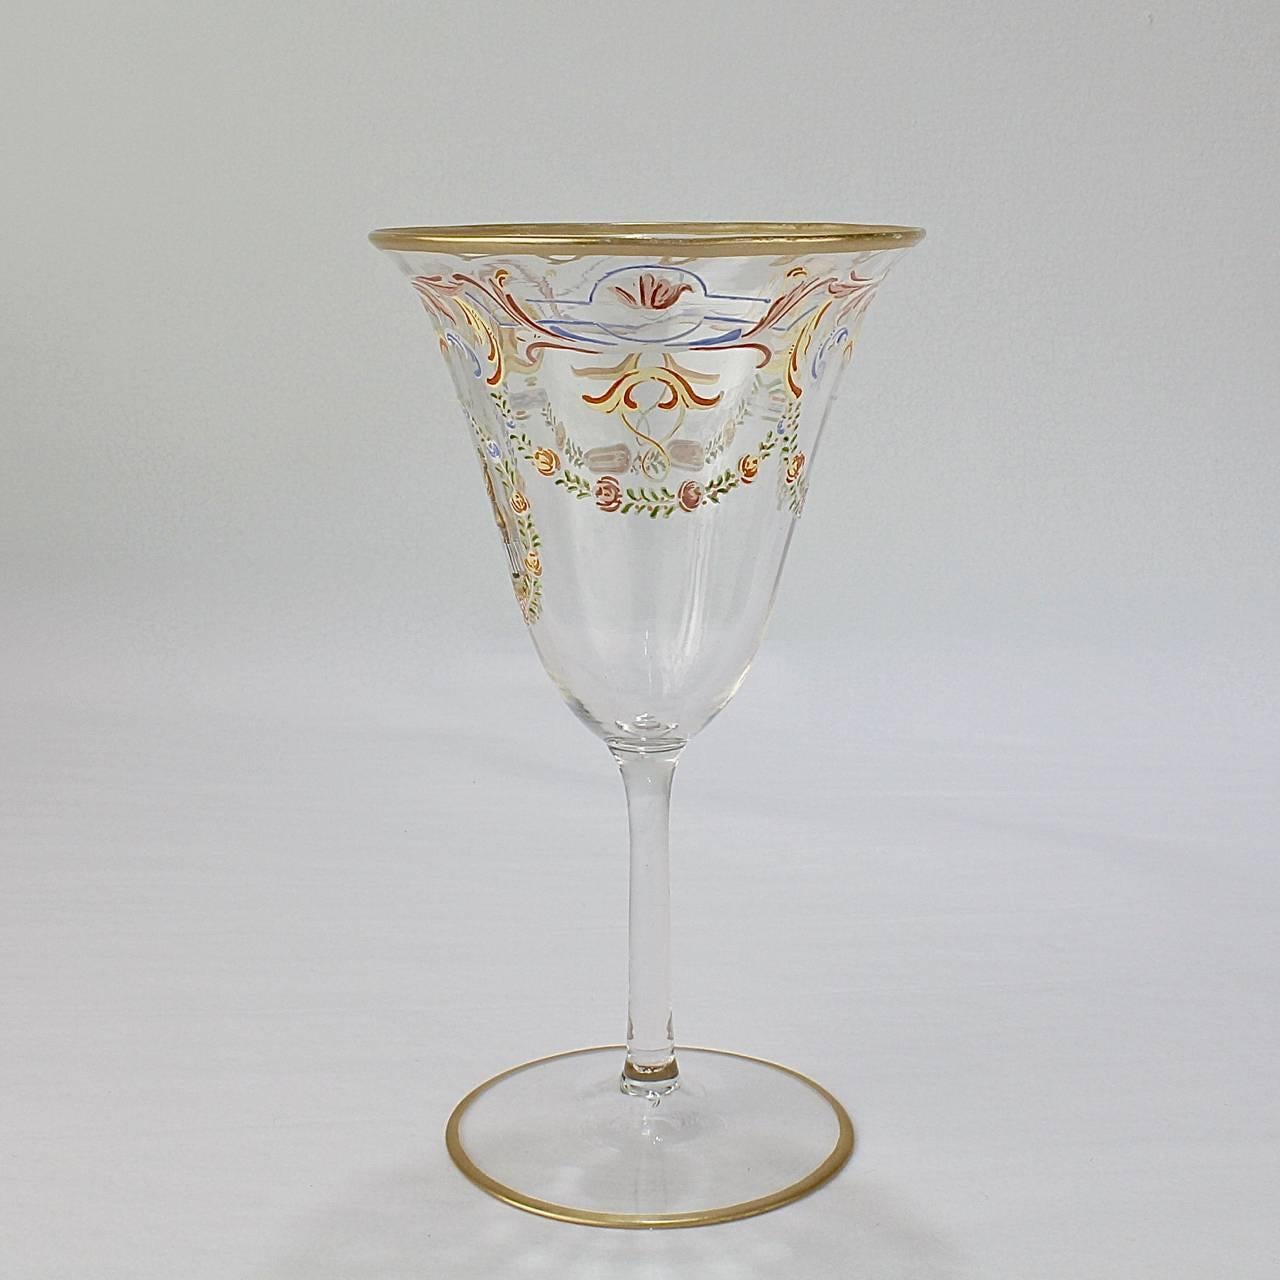 Renaissance Revival Set of 12 Enameled Venetian Glass Wine or Water Goblets, 1930s